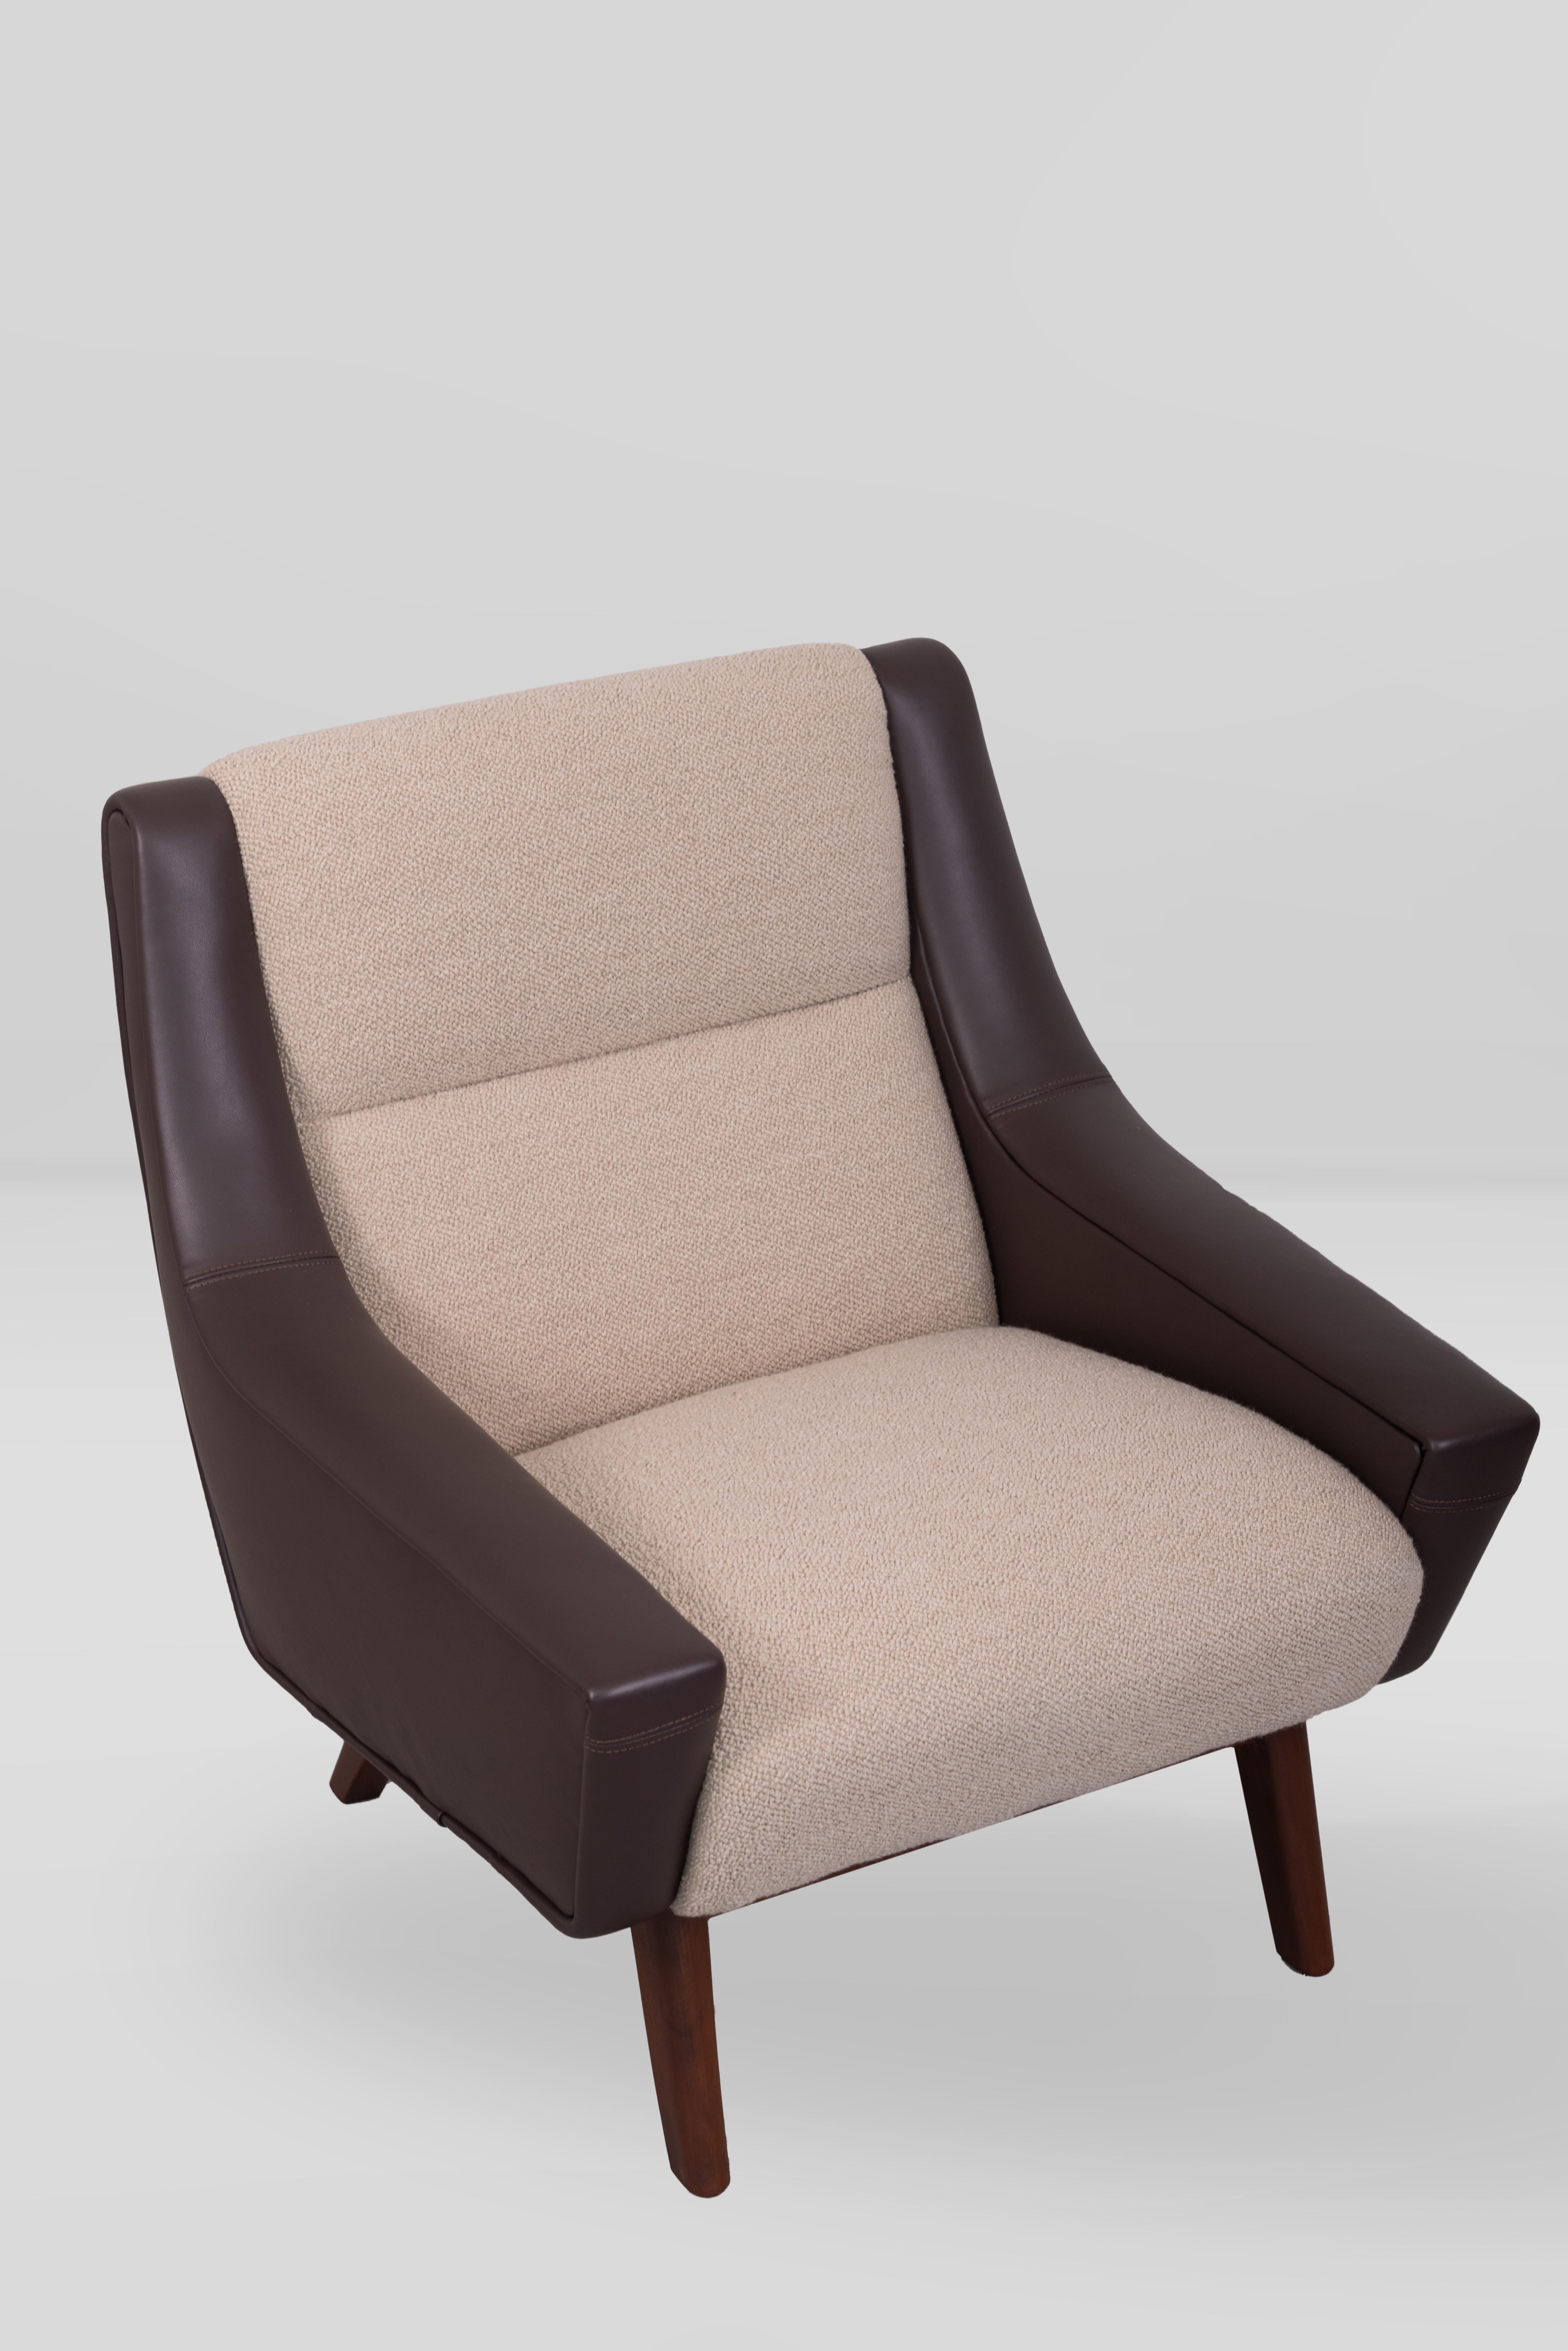 20th Century Scandinavian Mid-Century Lounge Chair, Denmark 1960s For Sale